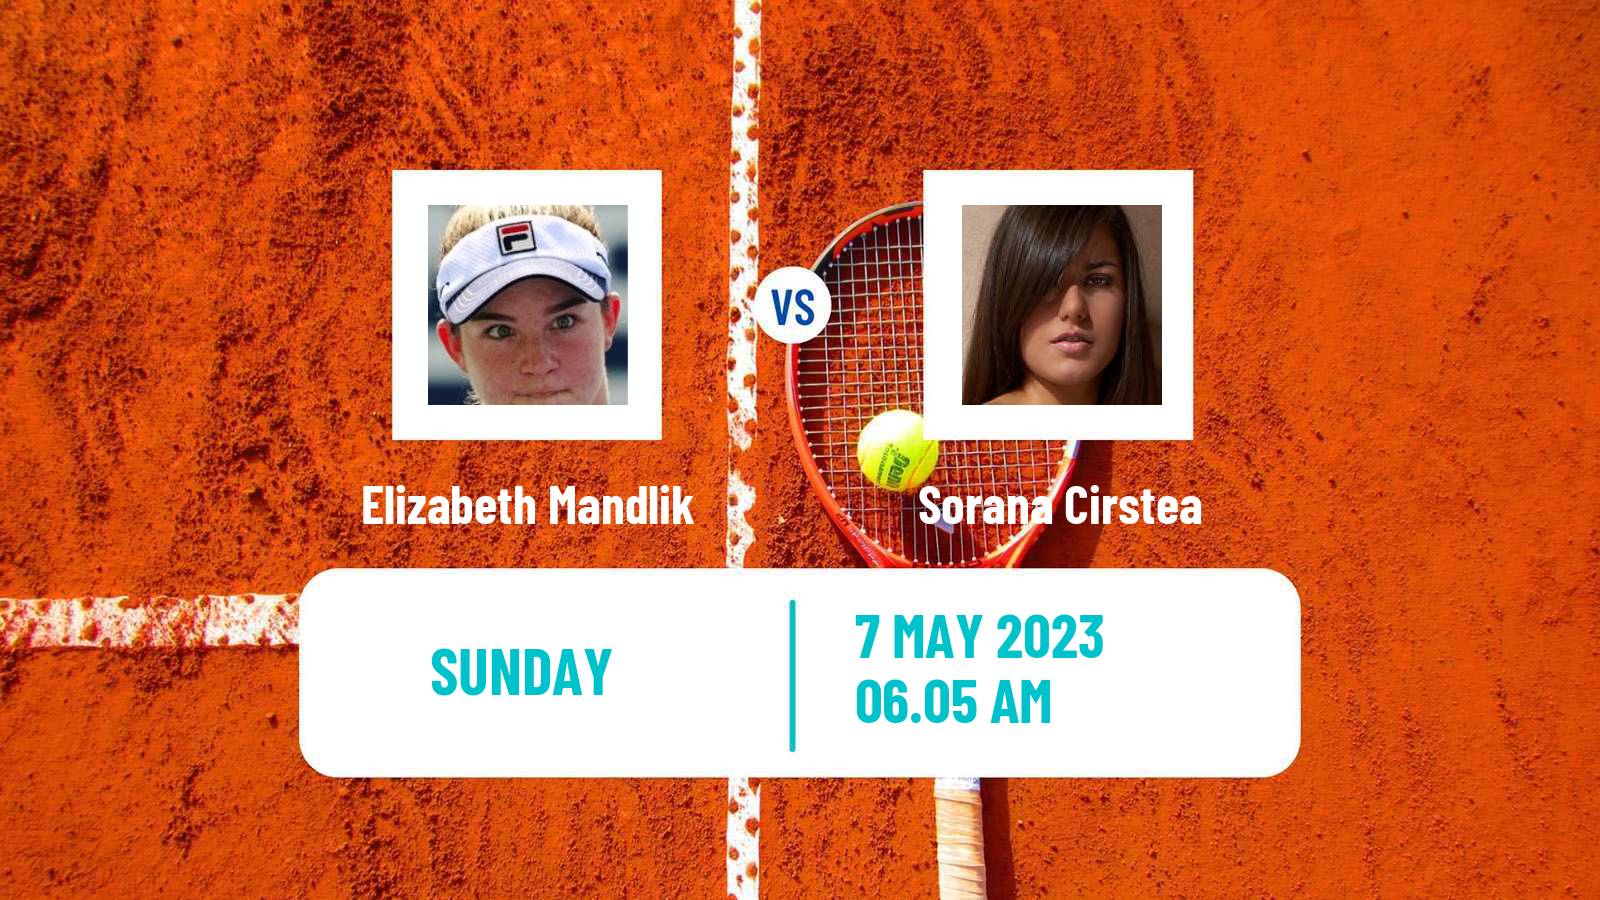 Tennis ATP Challenger Elizabeth Mandlik - Sorana Cirstea